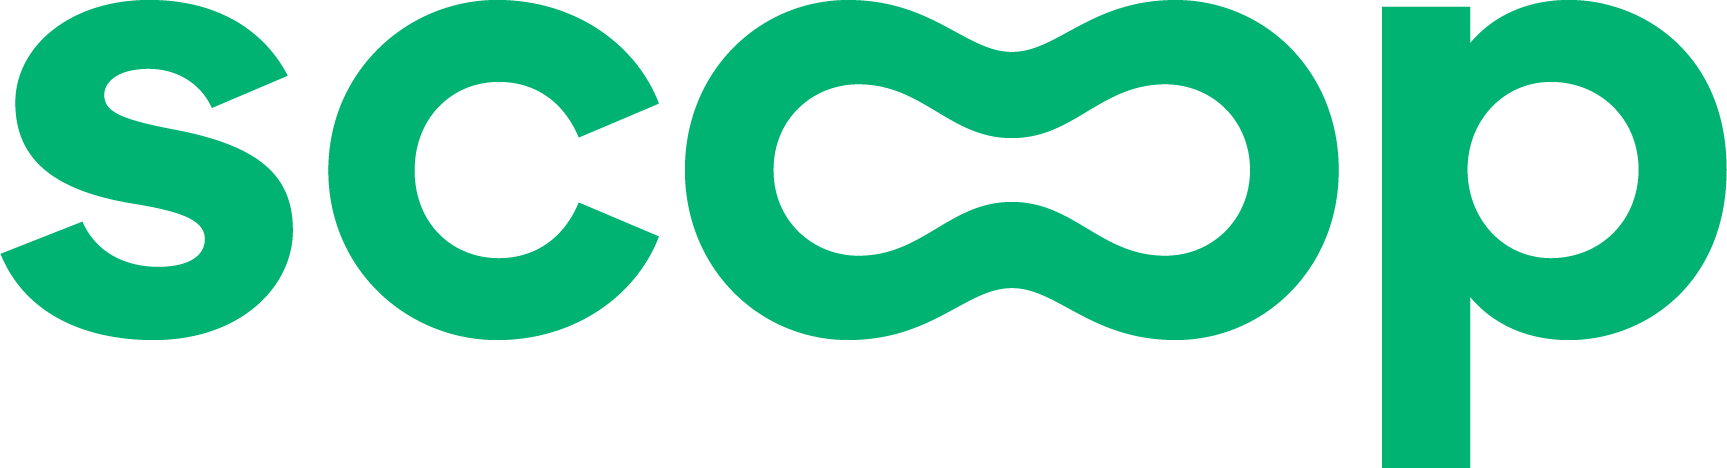 scoop-logo-web